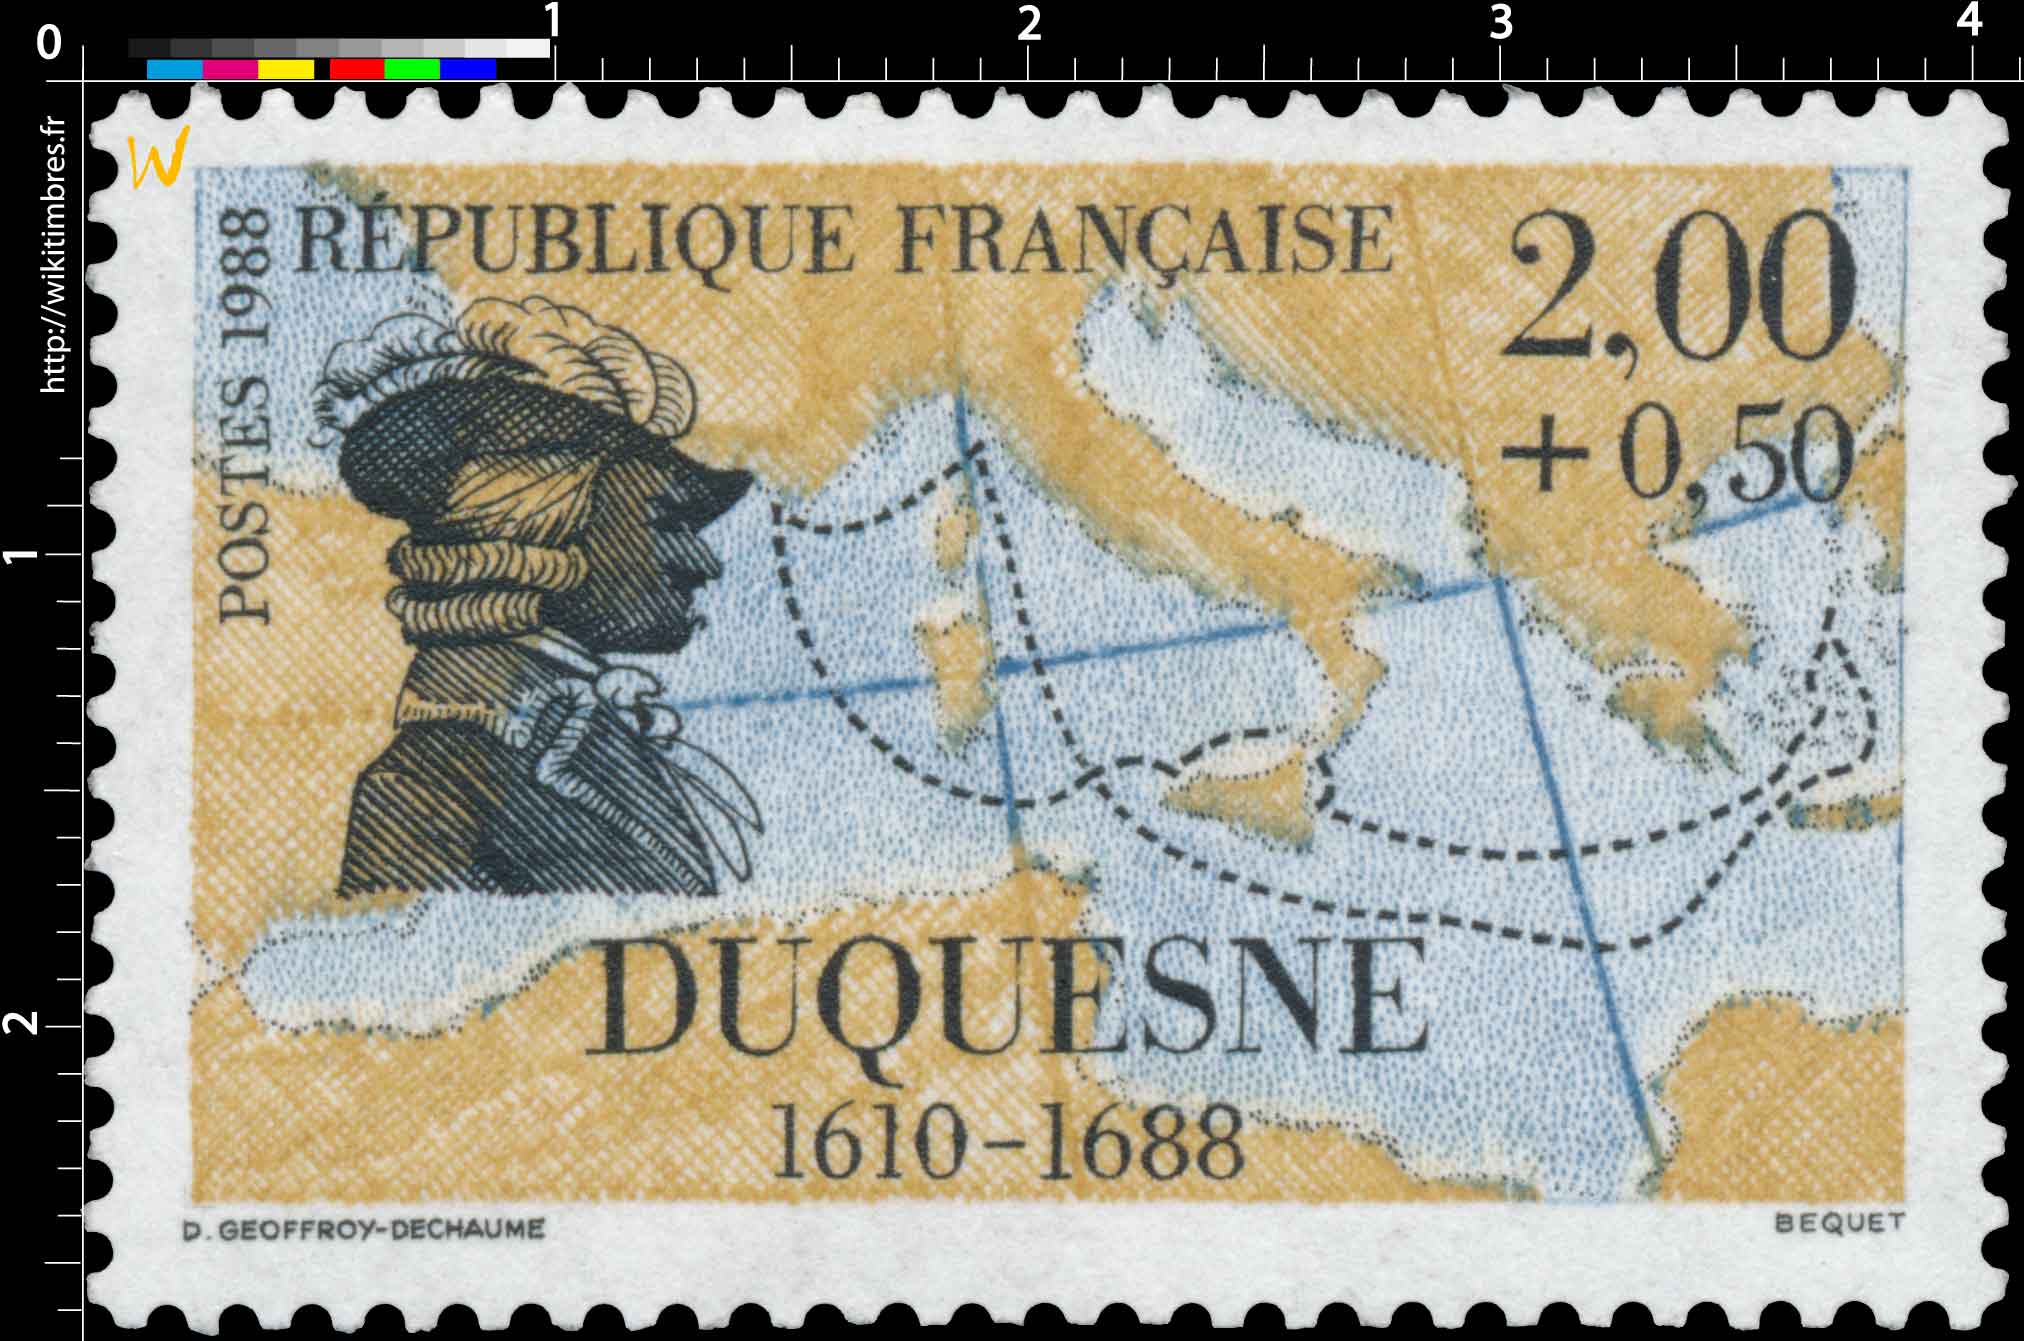 1988 DUQUESNE 1610-1688